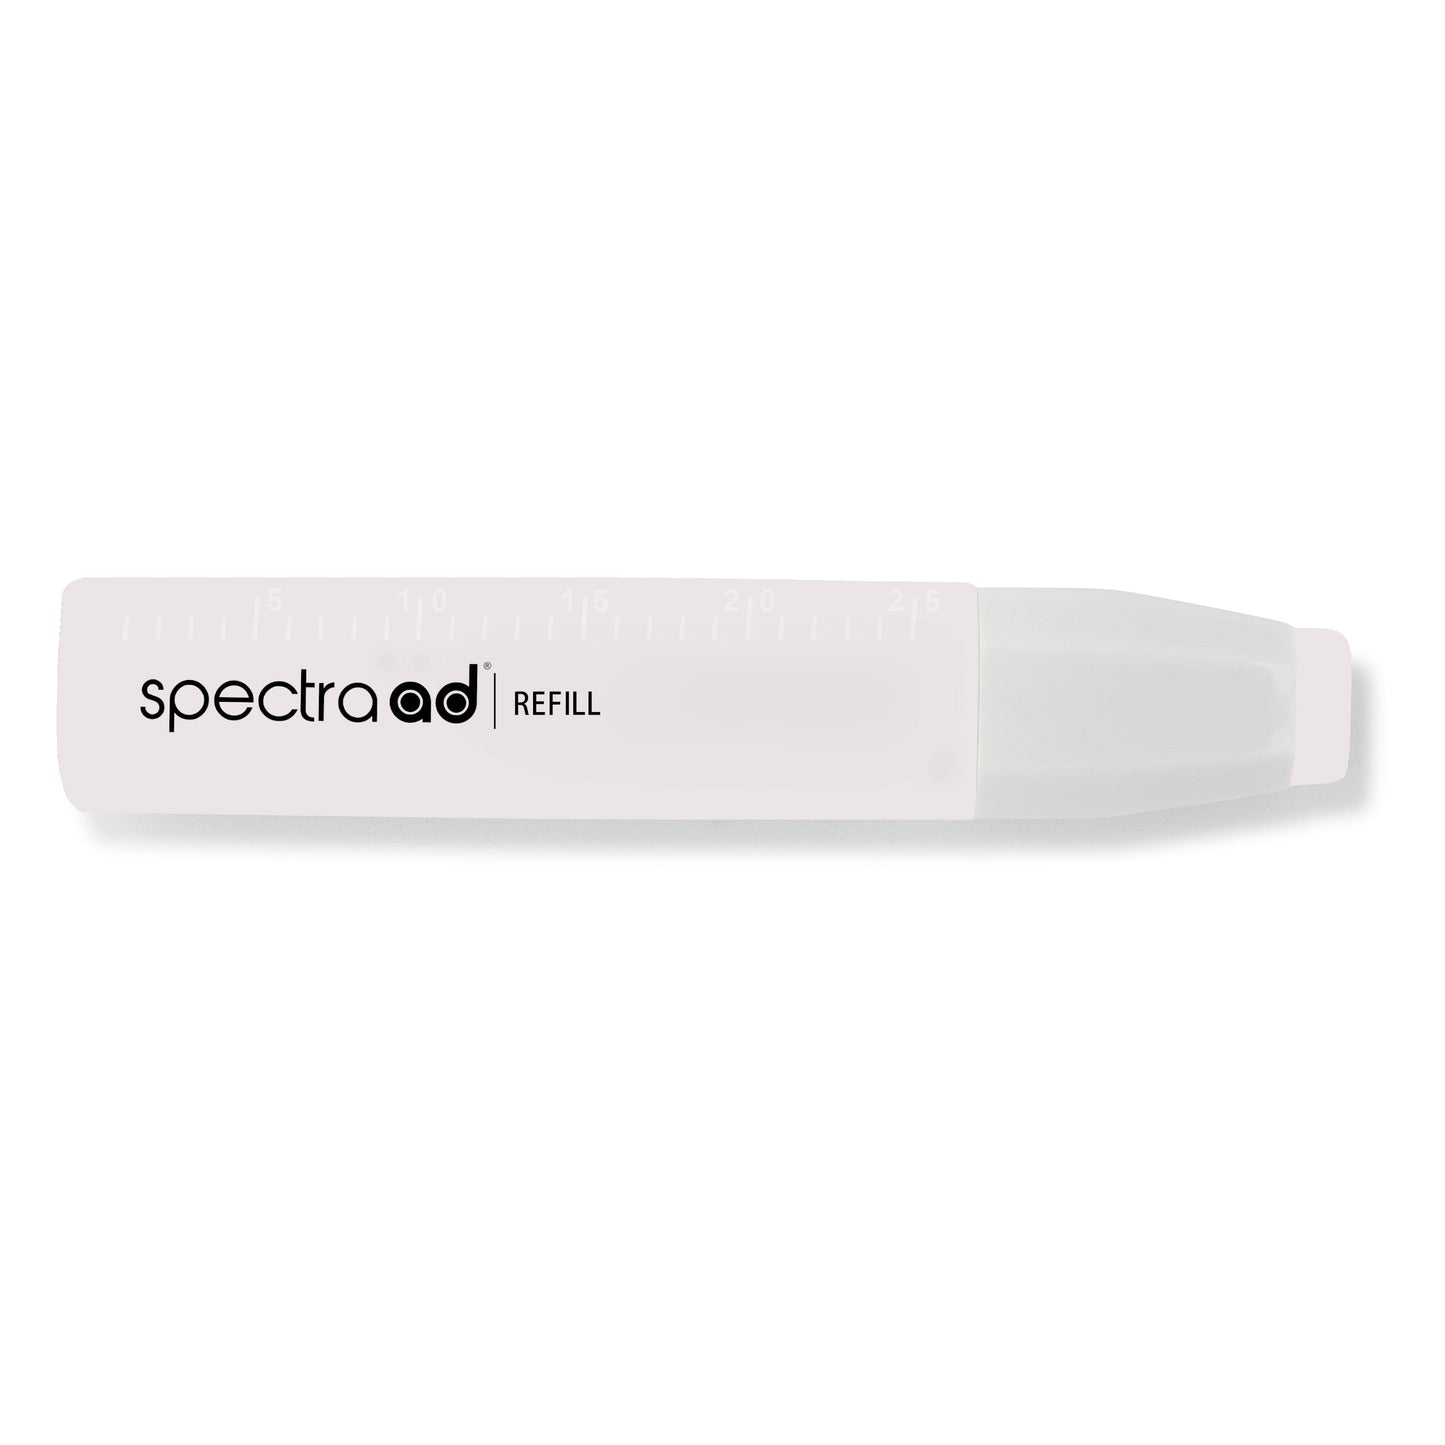 055 - Warm Gray 30% - Spectra AD Refill Bottle